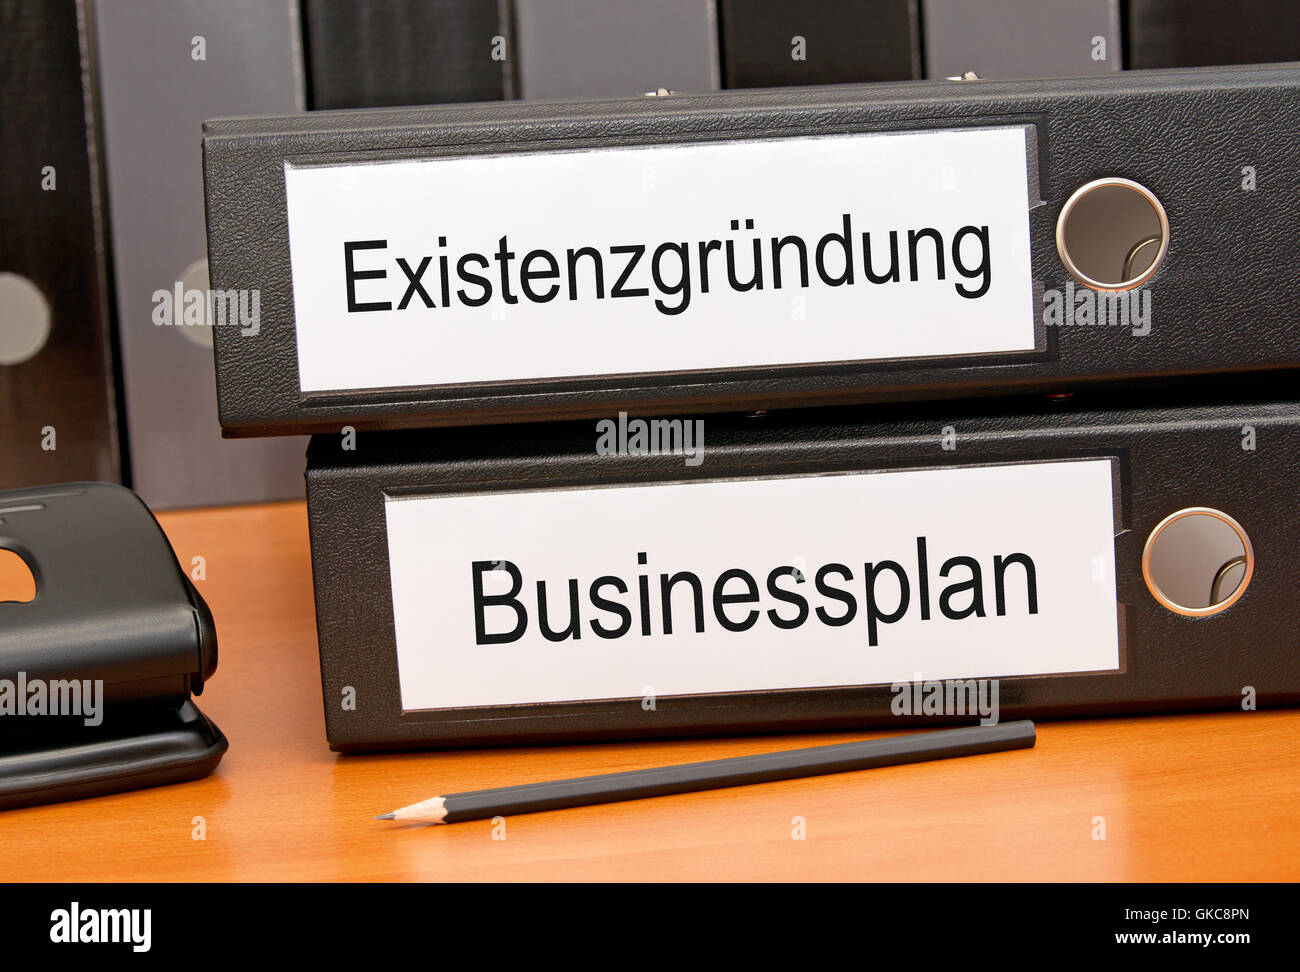 entrepreneurship and business plan Stock Photo